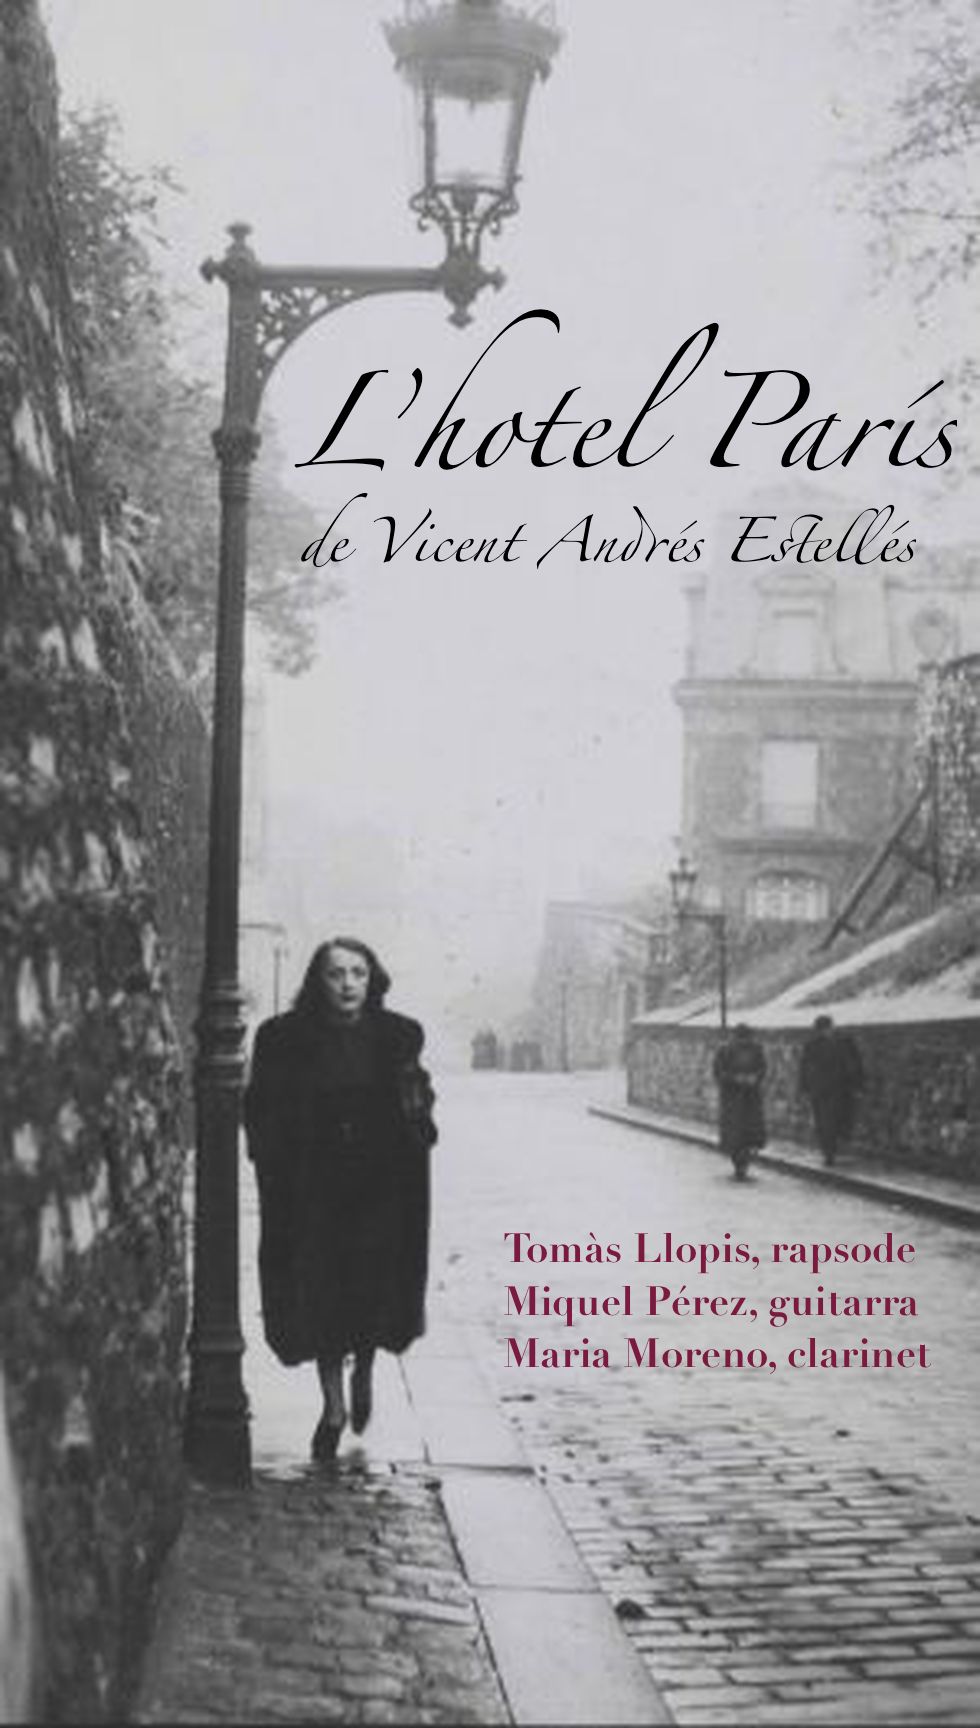 "L'Hotel París" de Vicent Andrés Estellés